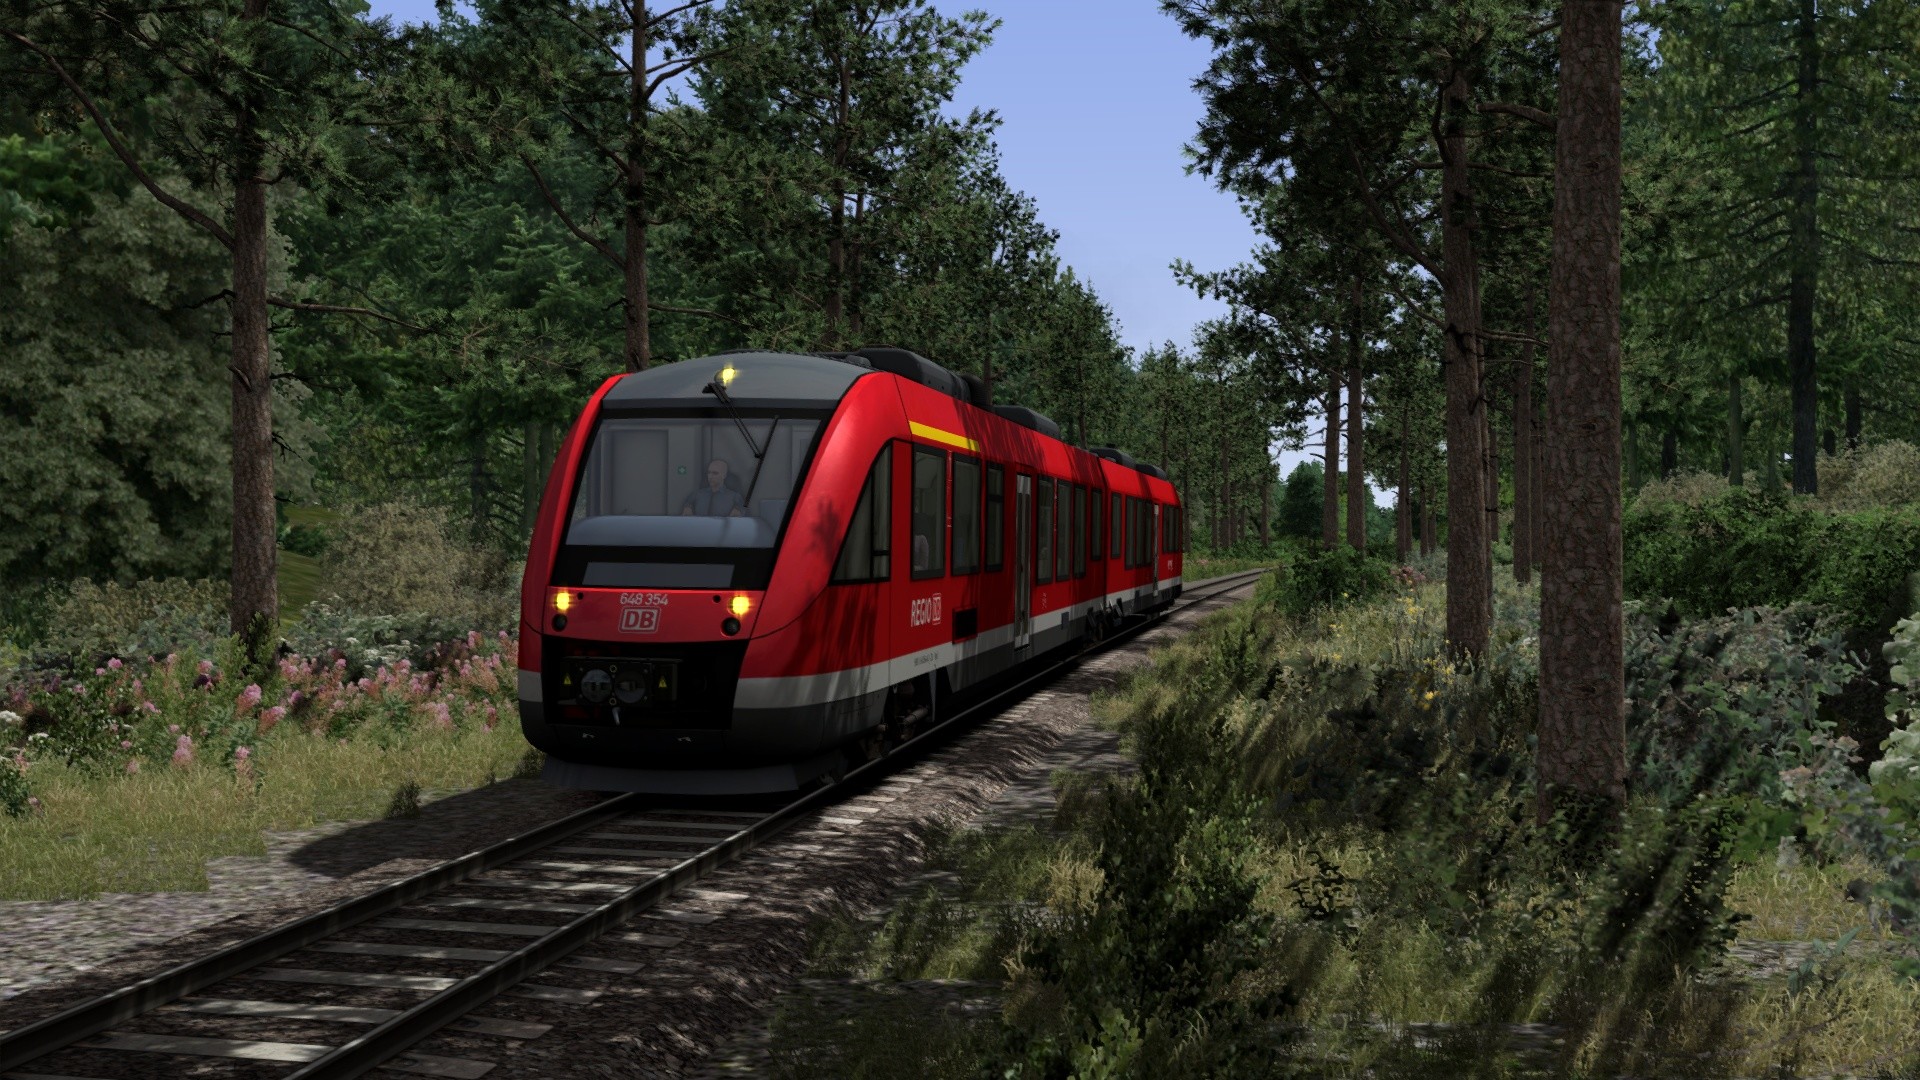 Train Simulator: Norddeutsche-Bahn: Kiel - Lübeck Route Add-On DLC Steam CD Key 5.13 $